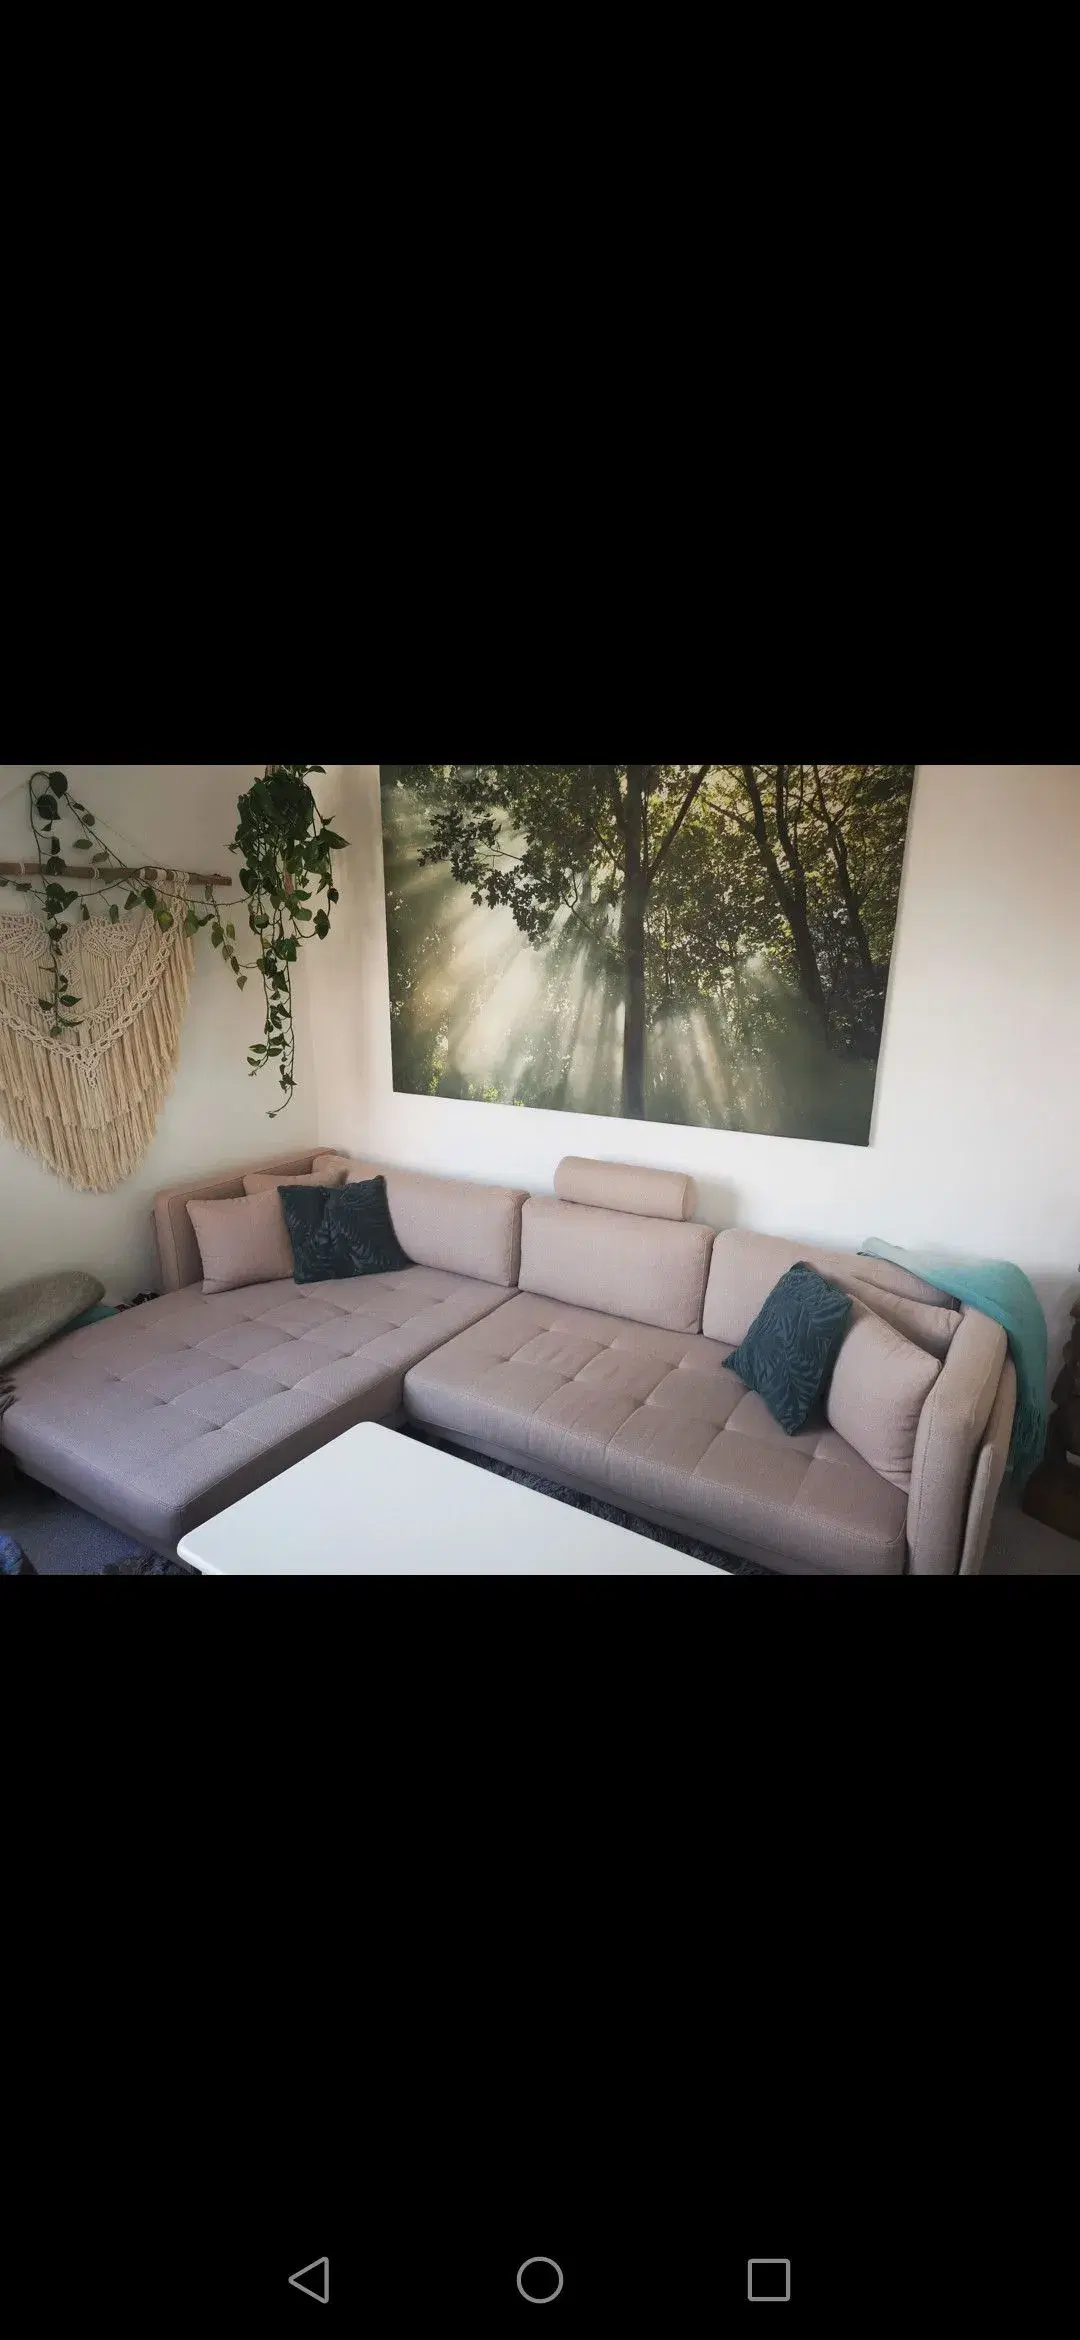 Chaiselong sofa perfekt til de små kbh lejl